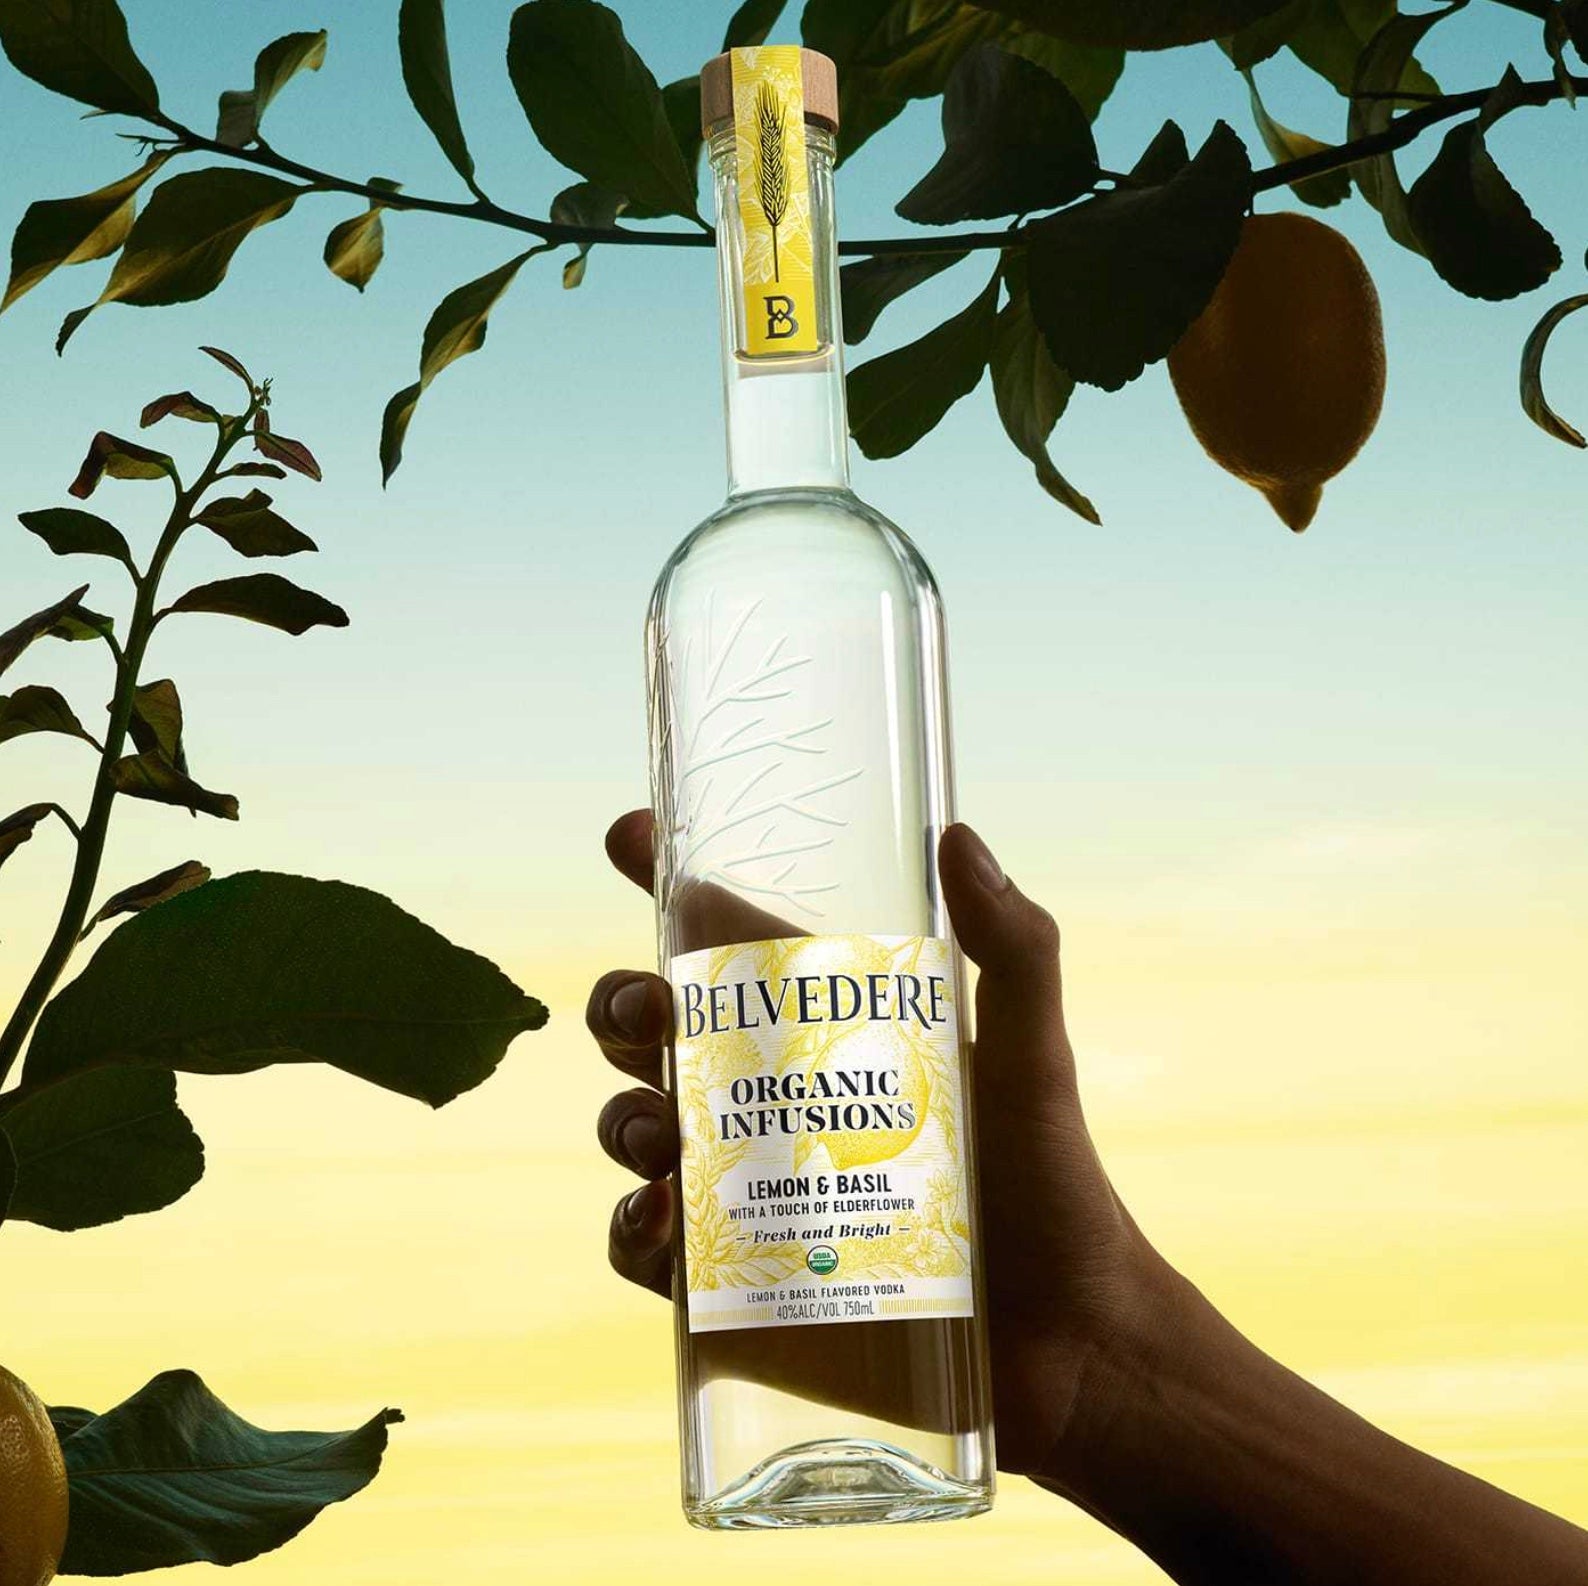 Belvedere Organic Infusions Pear & Ginger Vodka 70cl - DrinkSupermarket